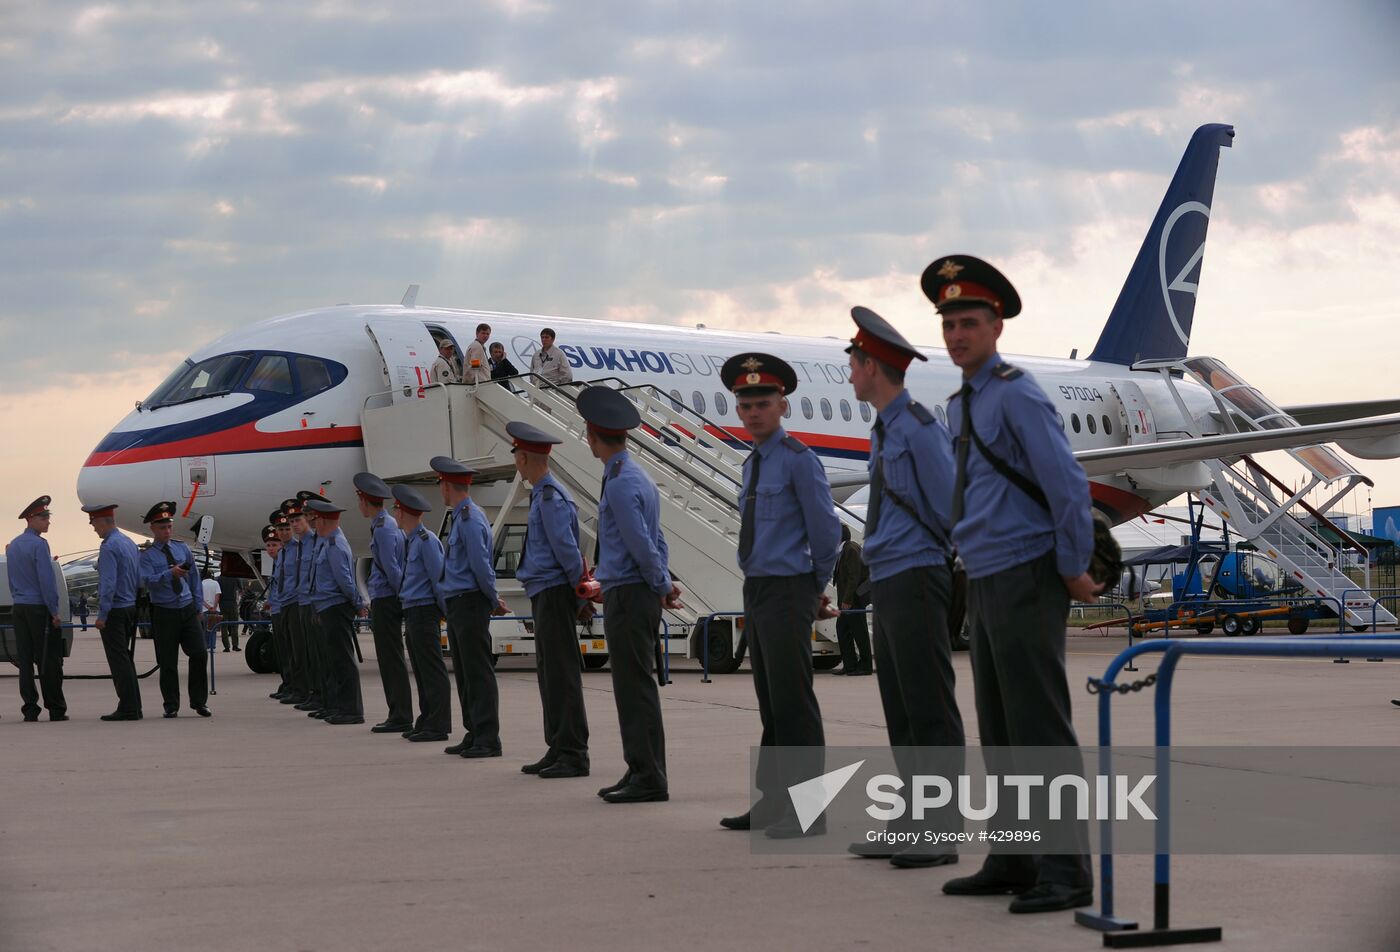 MAKS 2009 air show opens in Zhukovsky